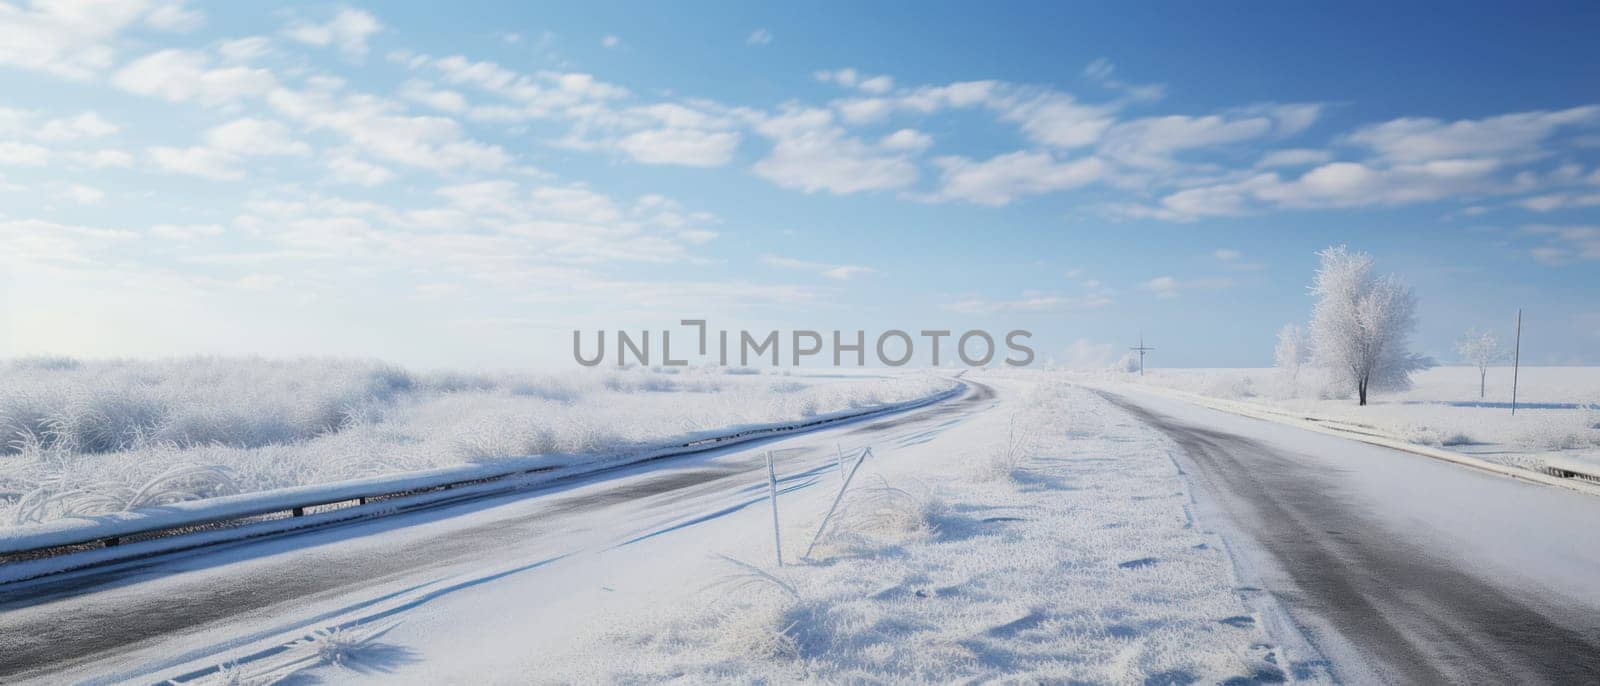 Winter Wonderland: A Serene Frozen Landscape of Snowy Tranquility.